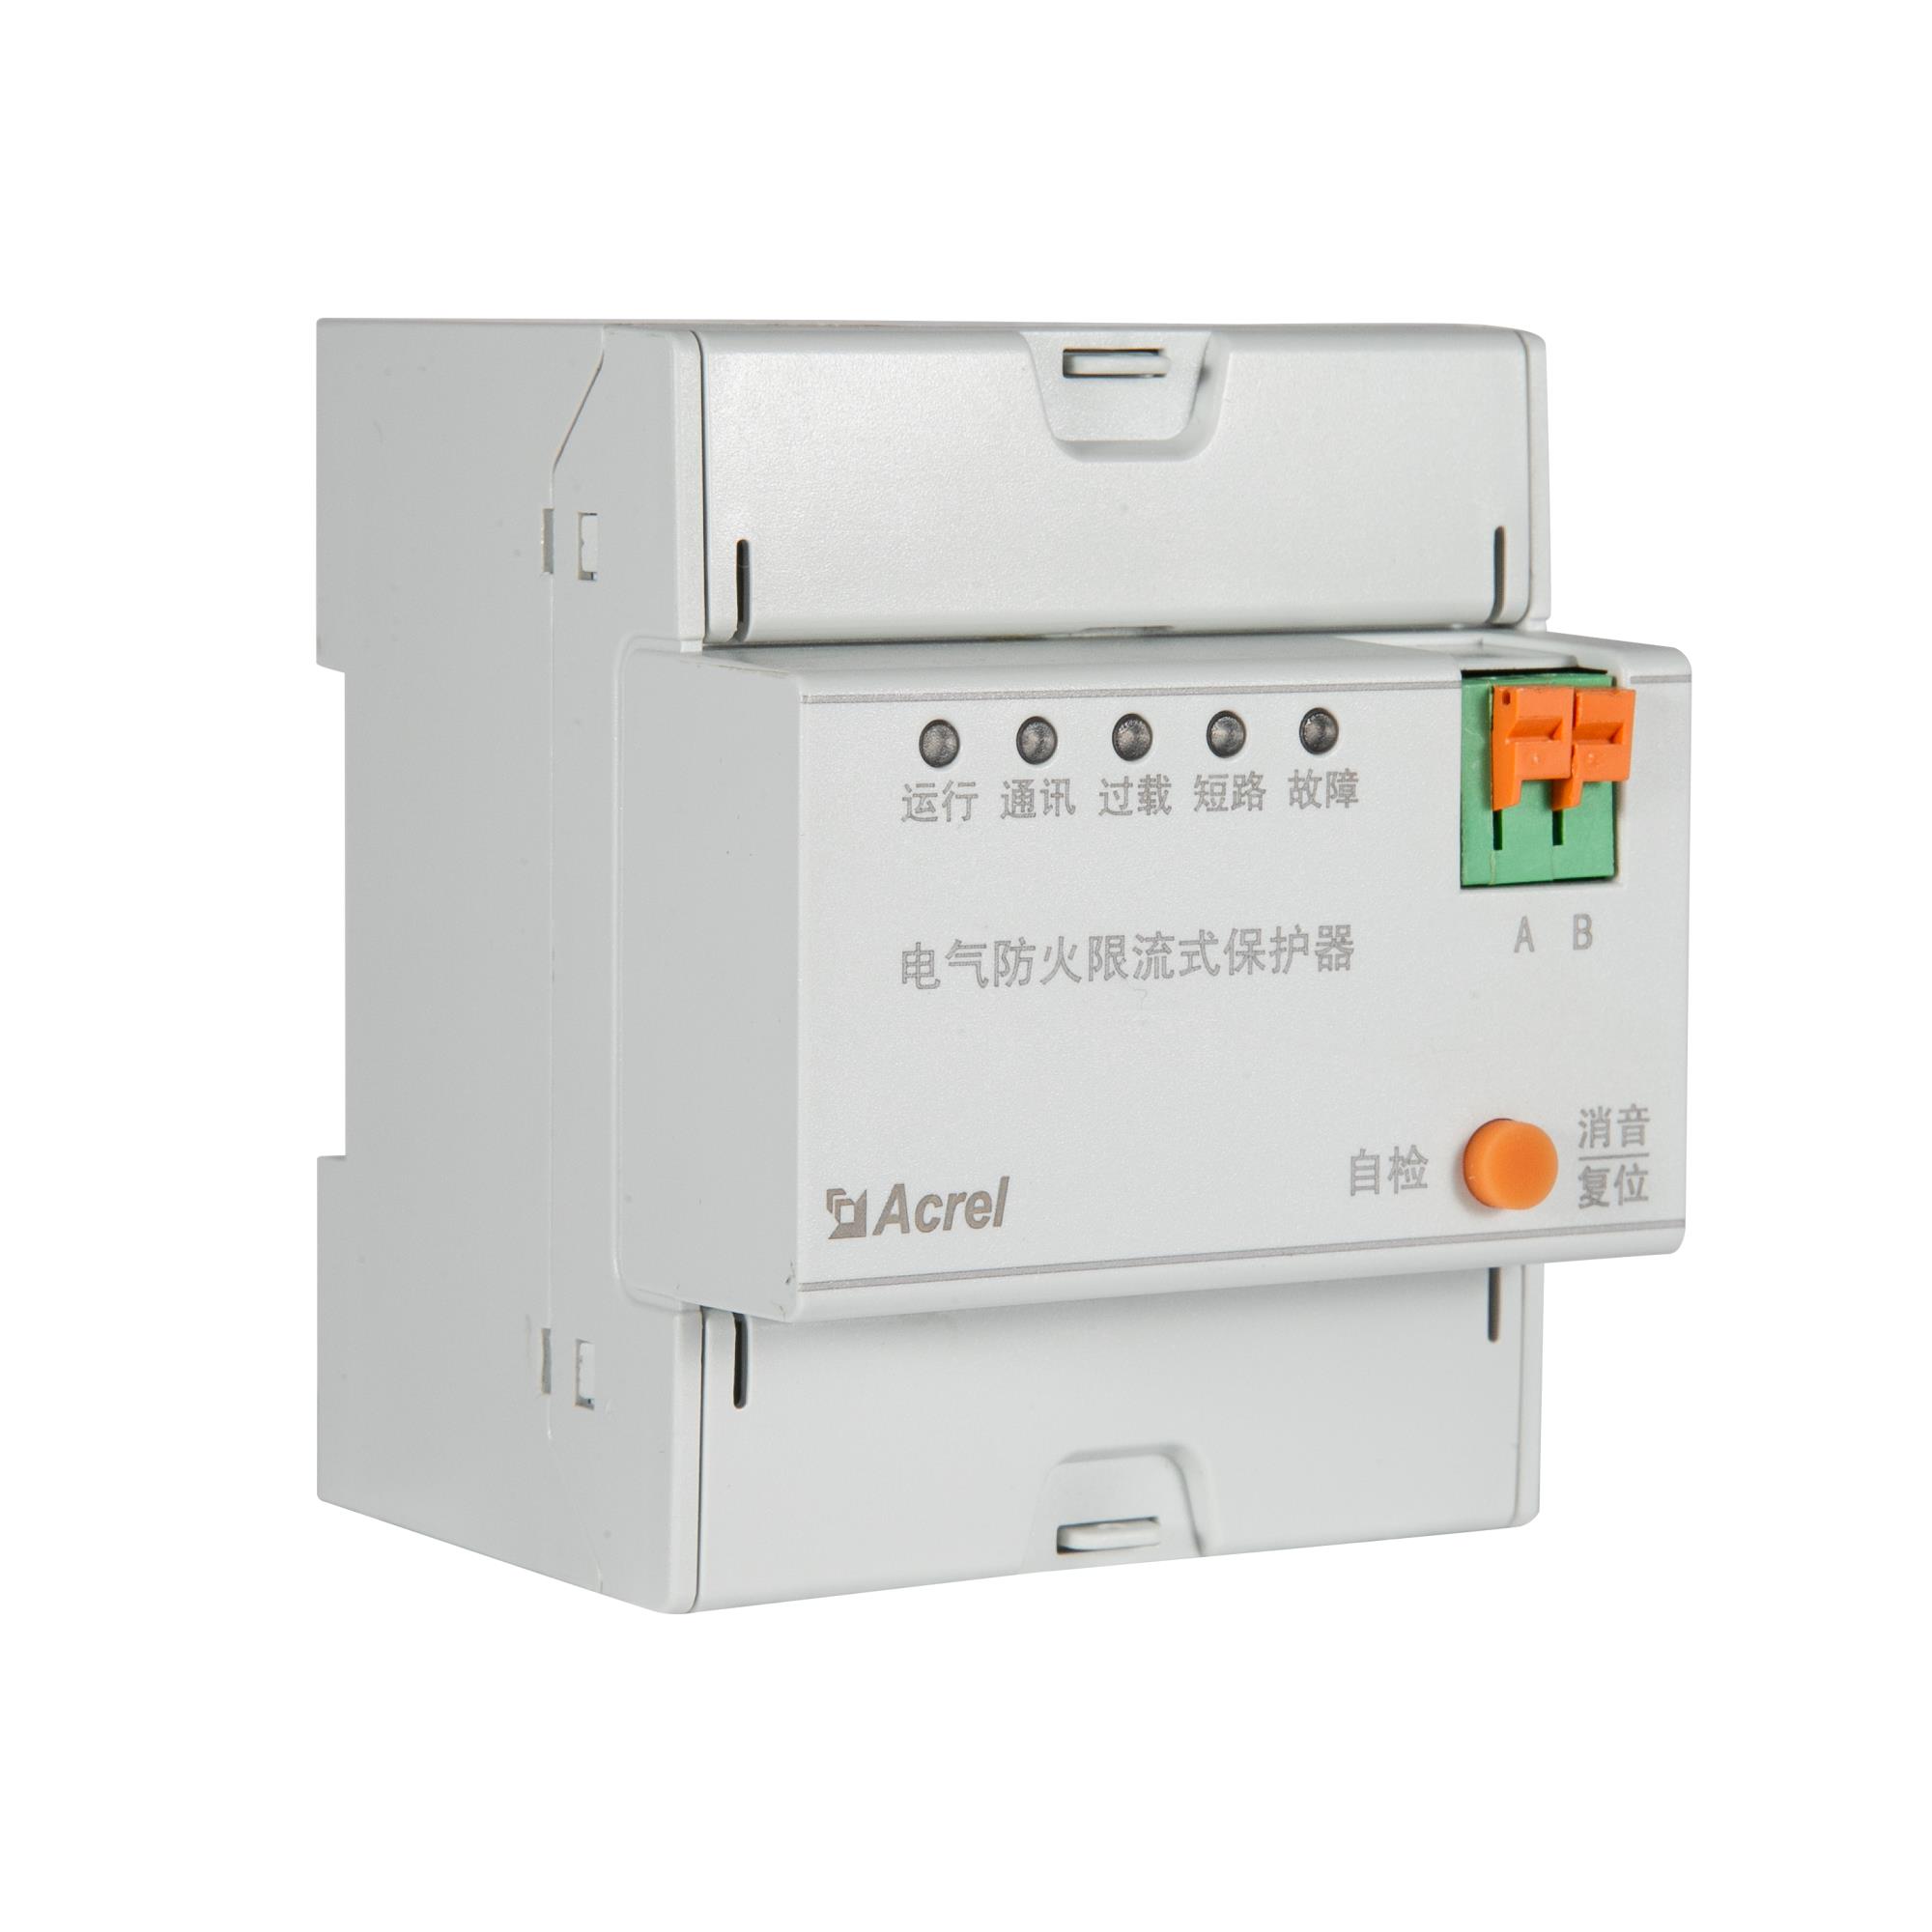 ASCP200-1限流式保护器价格 限流式断电保护器